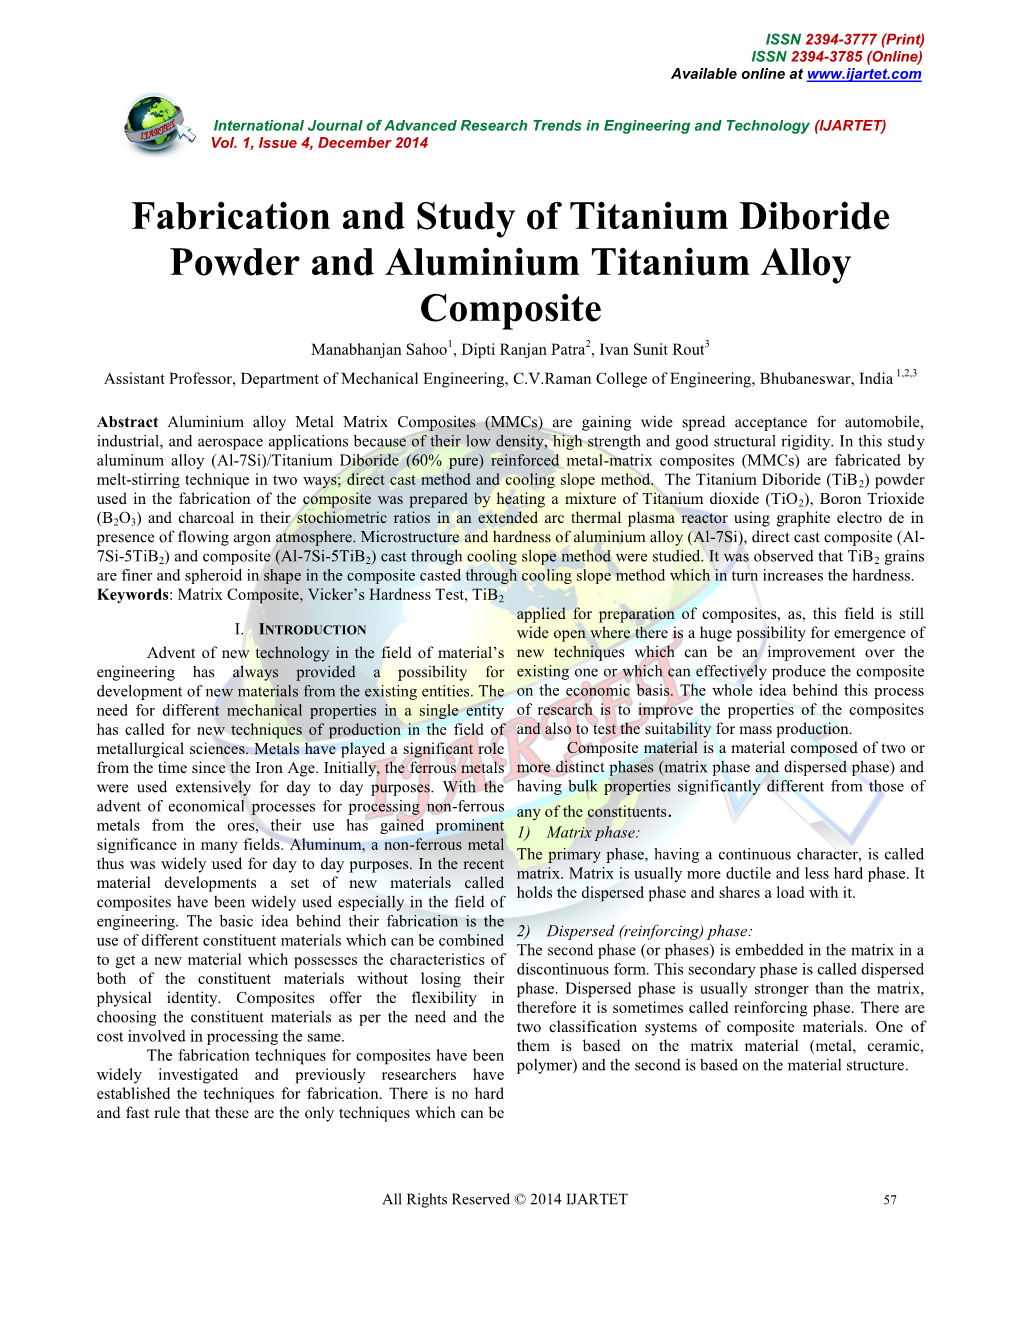 Fabrication and Study of Titanium Diboride Powder and Aluminium